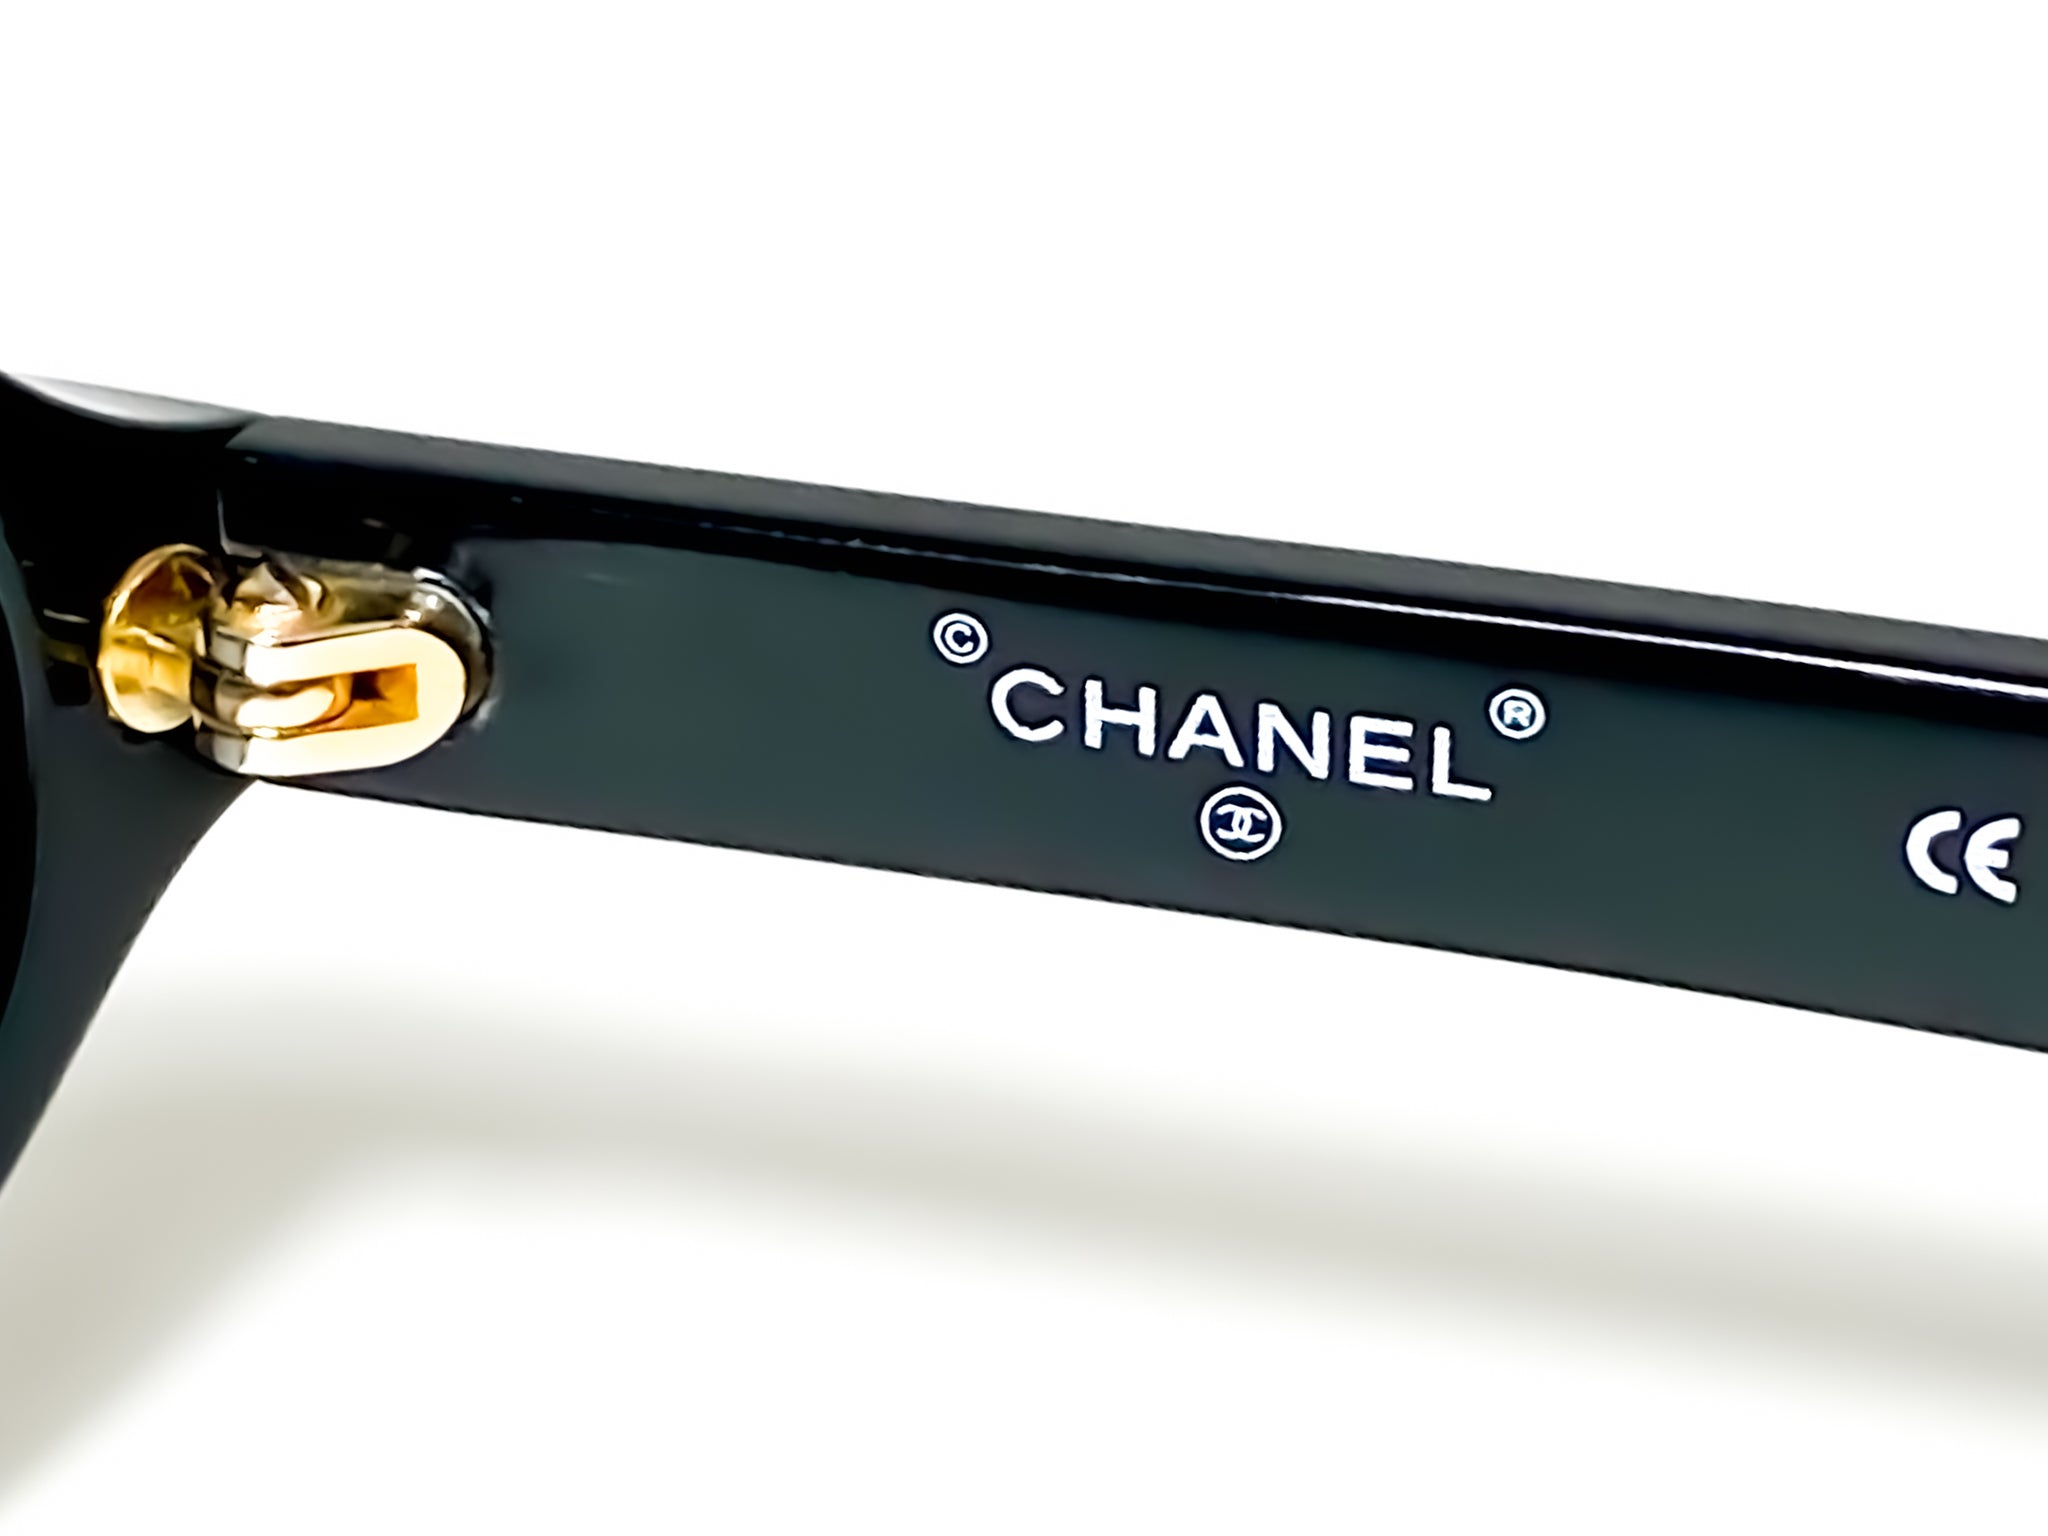 Chanel Skinny Sunglasses